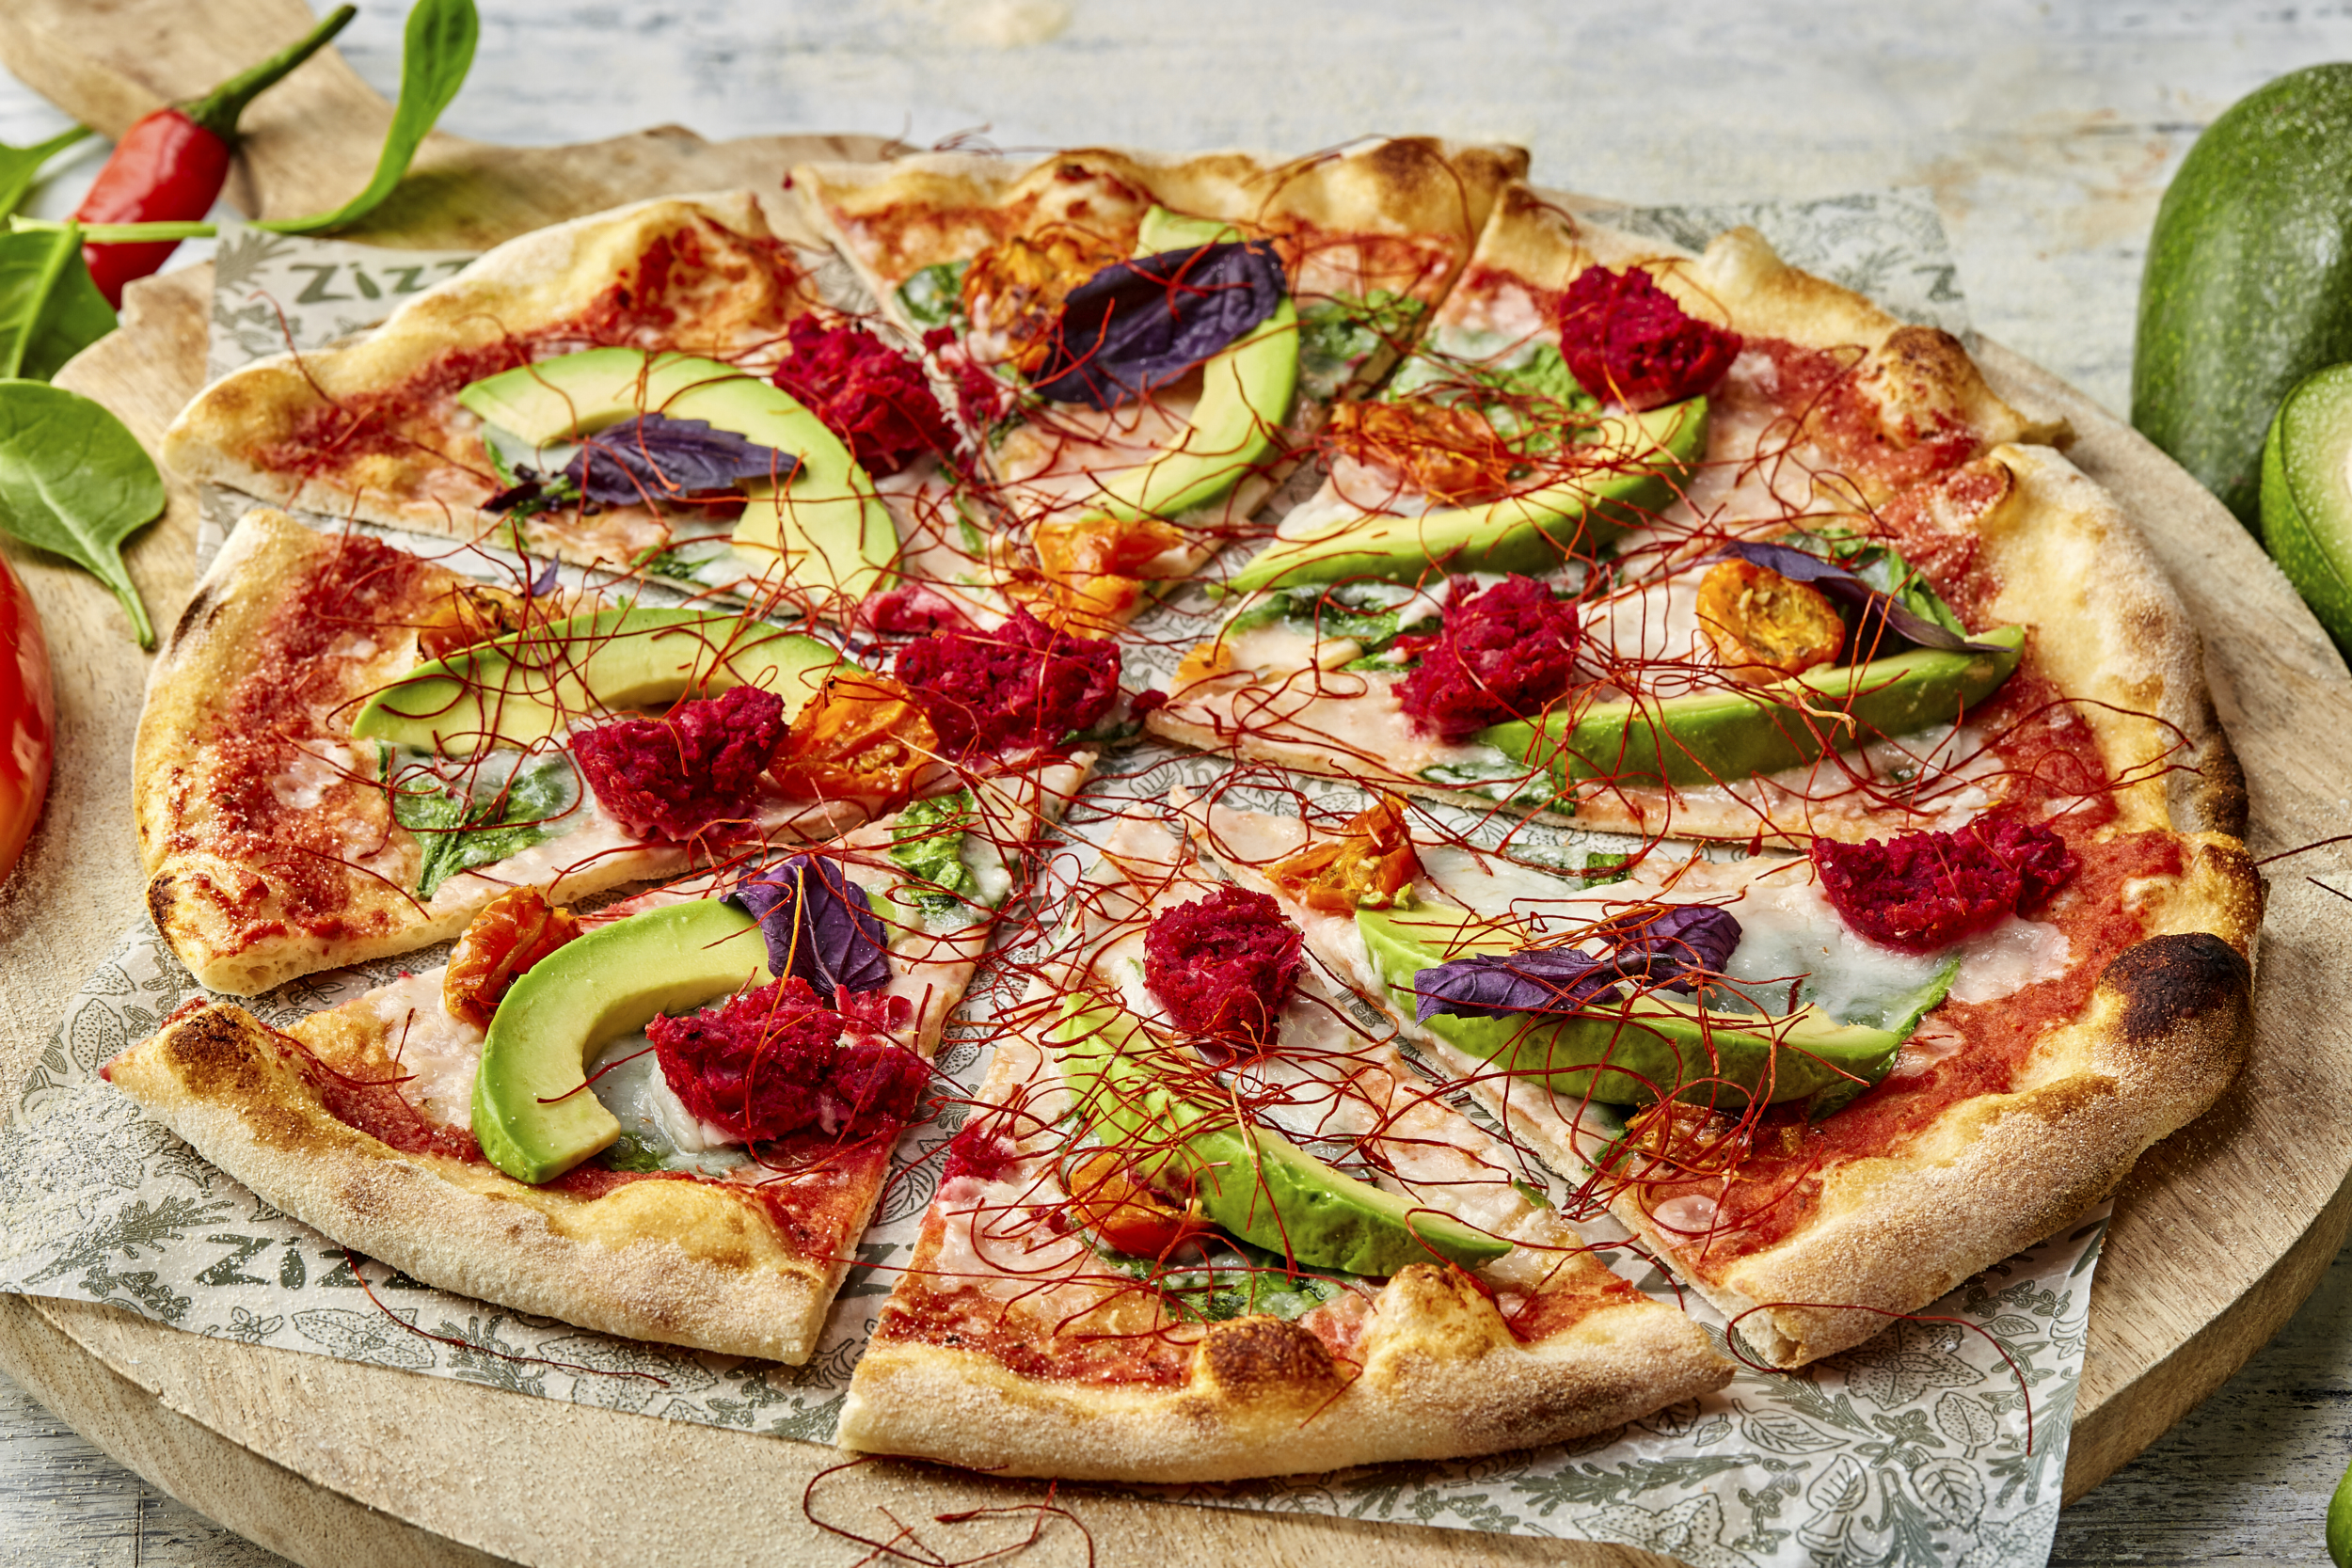 Zizzi vegan rainbow pizza